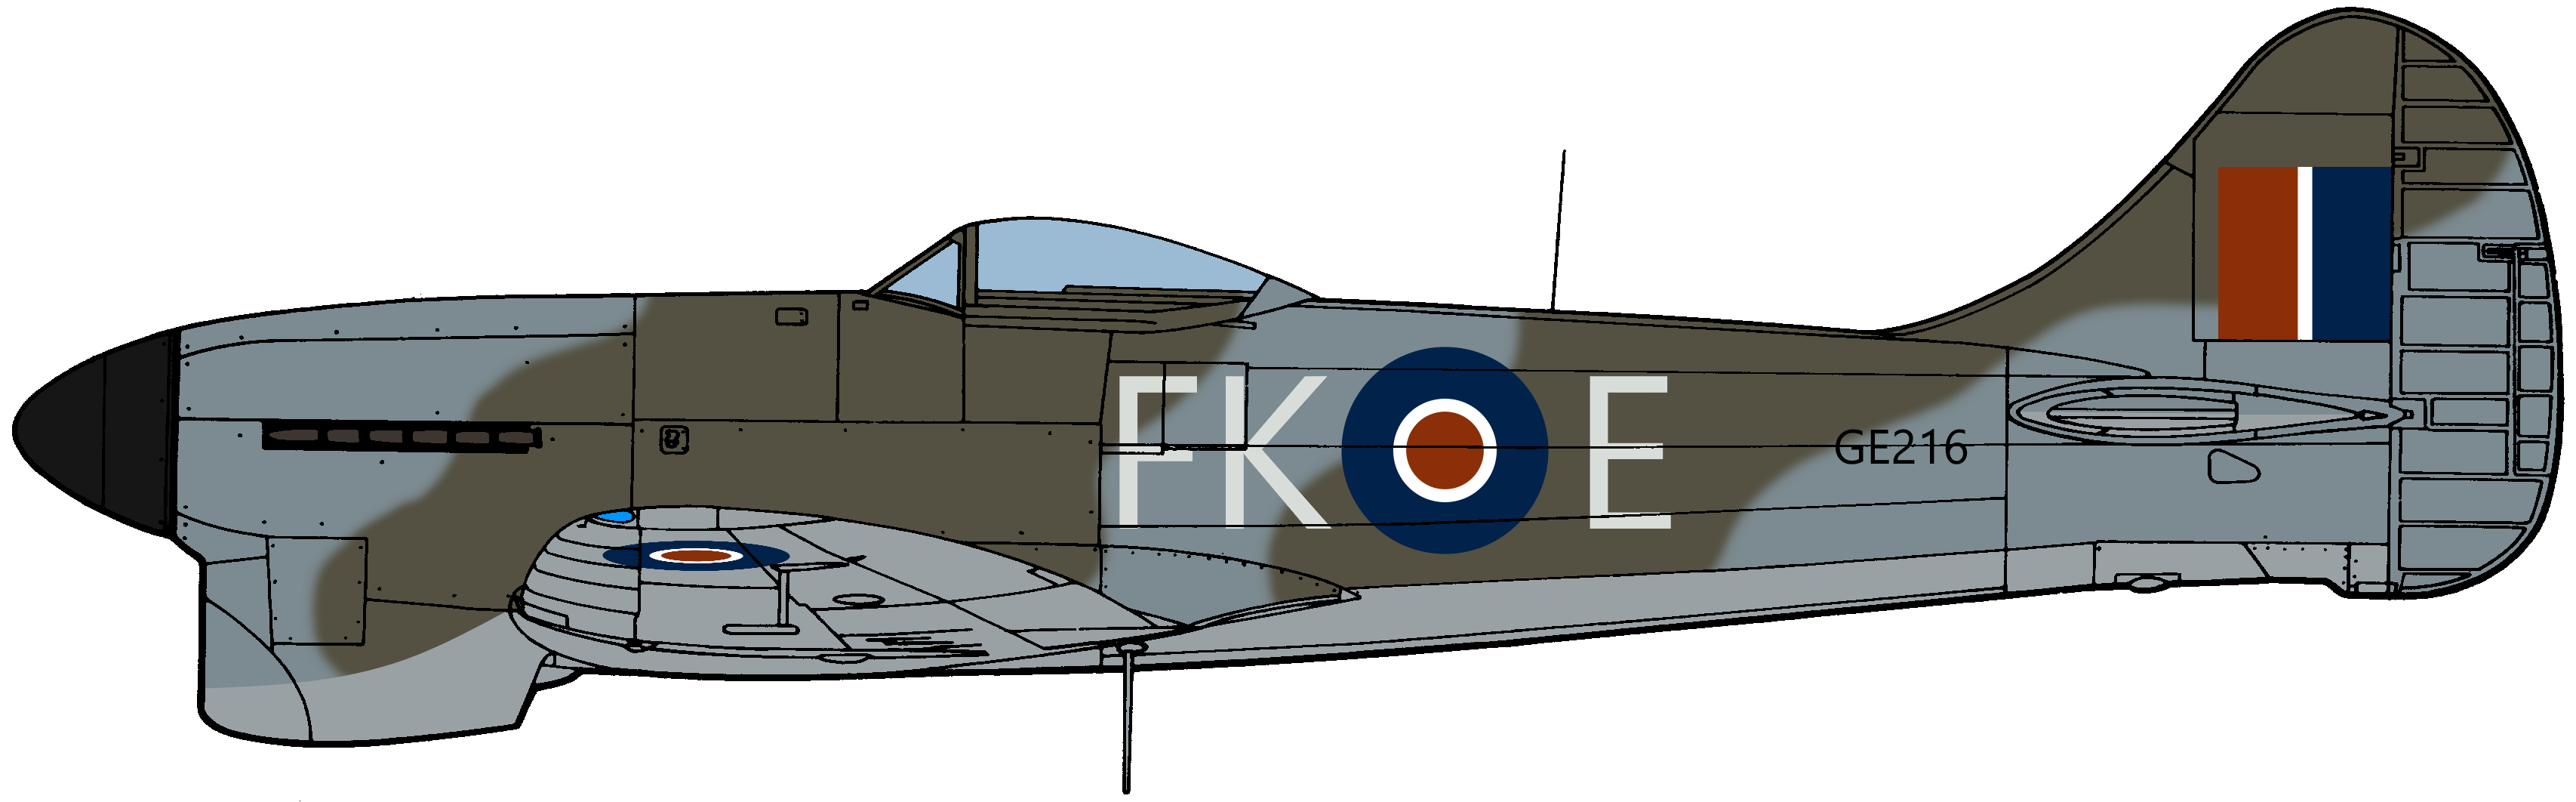 Hawker Tempest Mk V.png